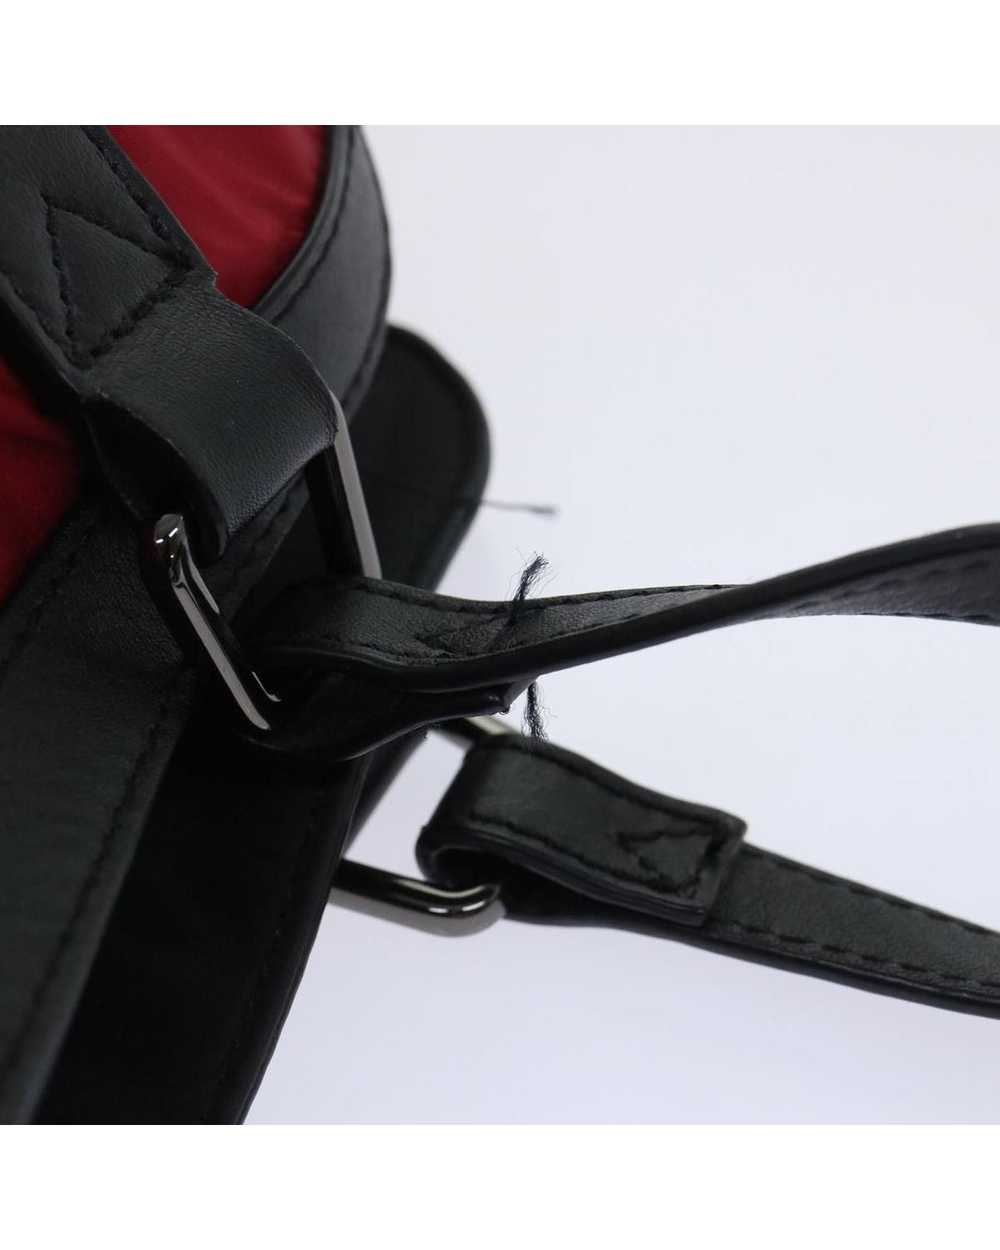 Burberry Red Nylon Leather Shoulder Bag - image 8